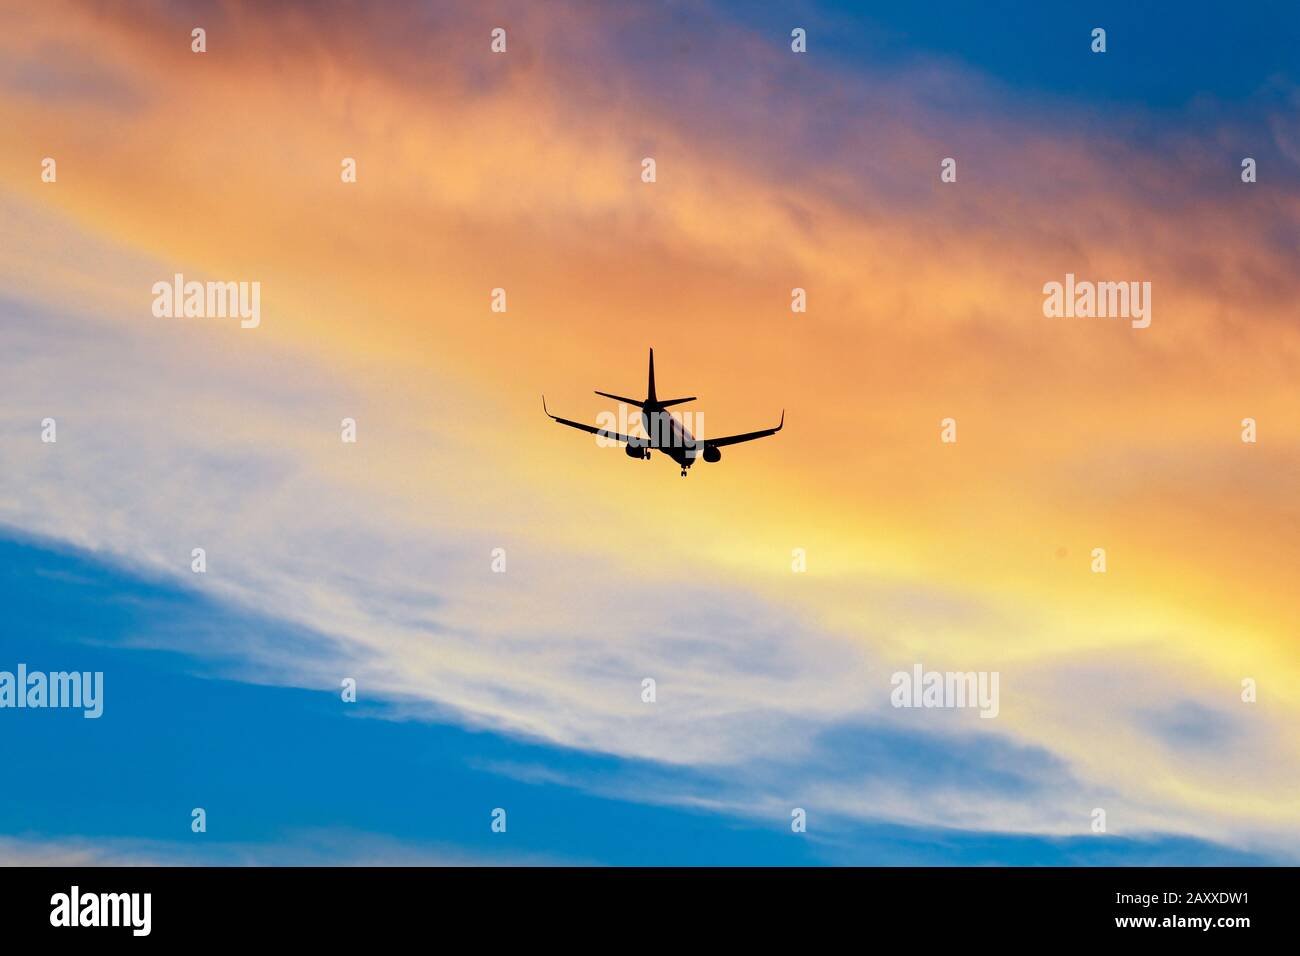 Commercial jet descending at sunset. Stock Photo